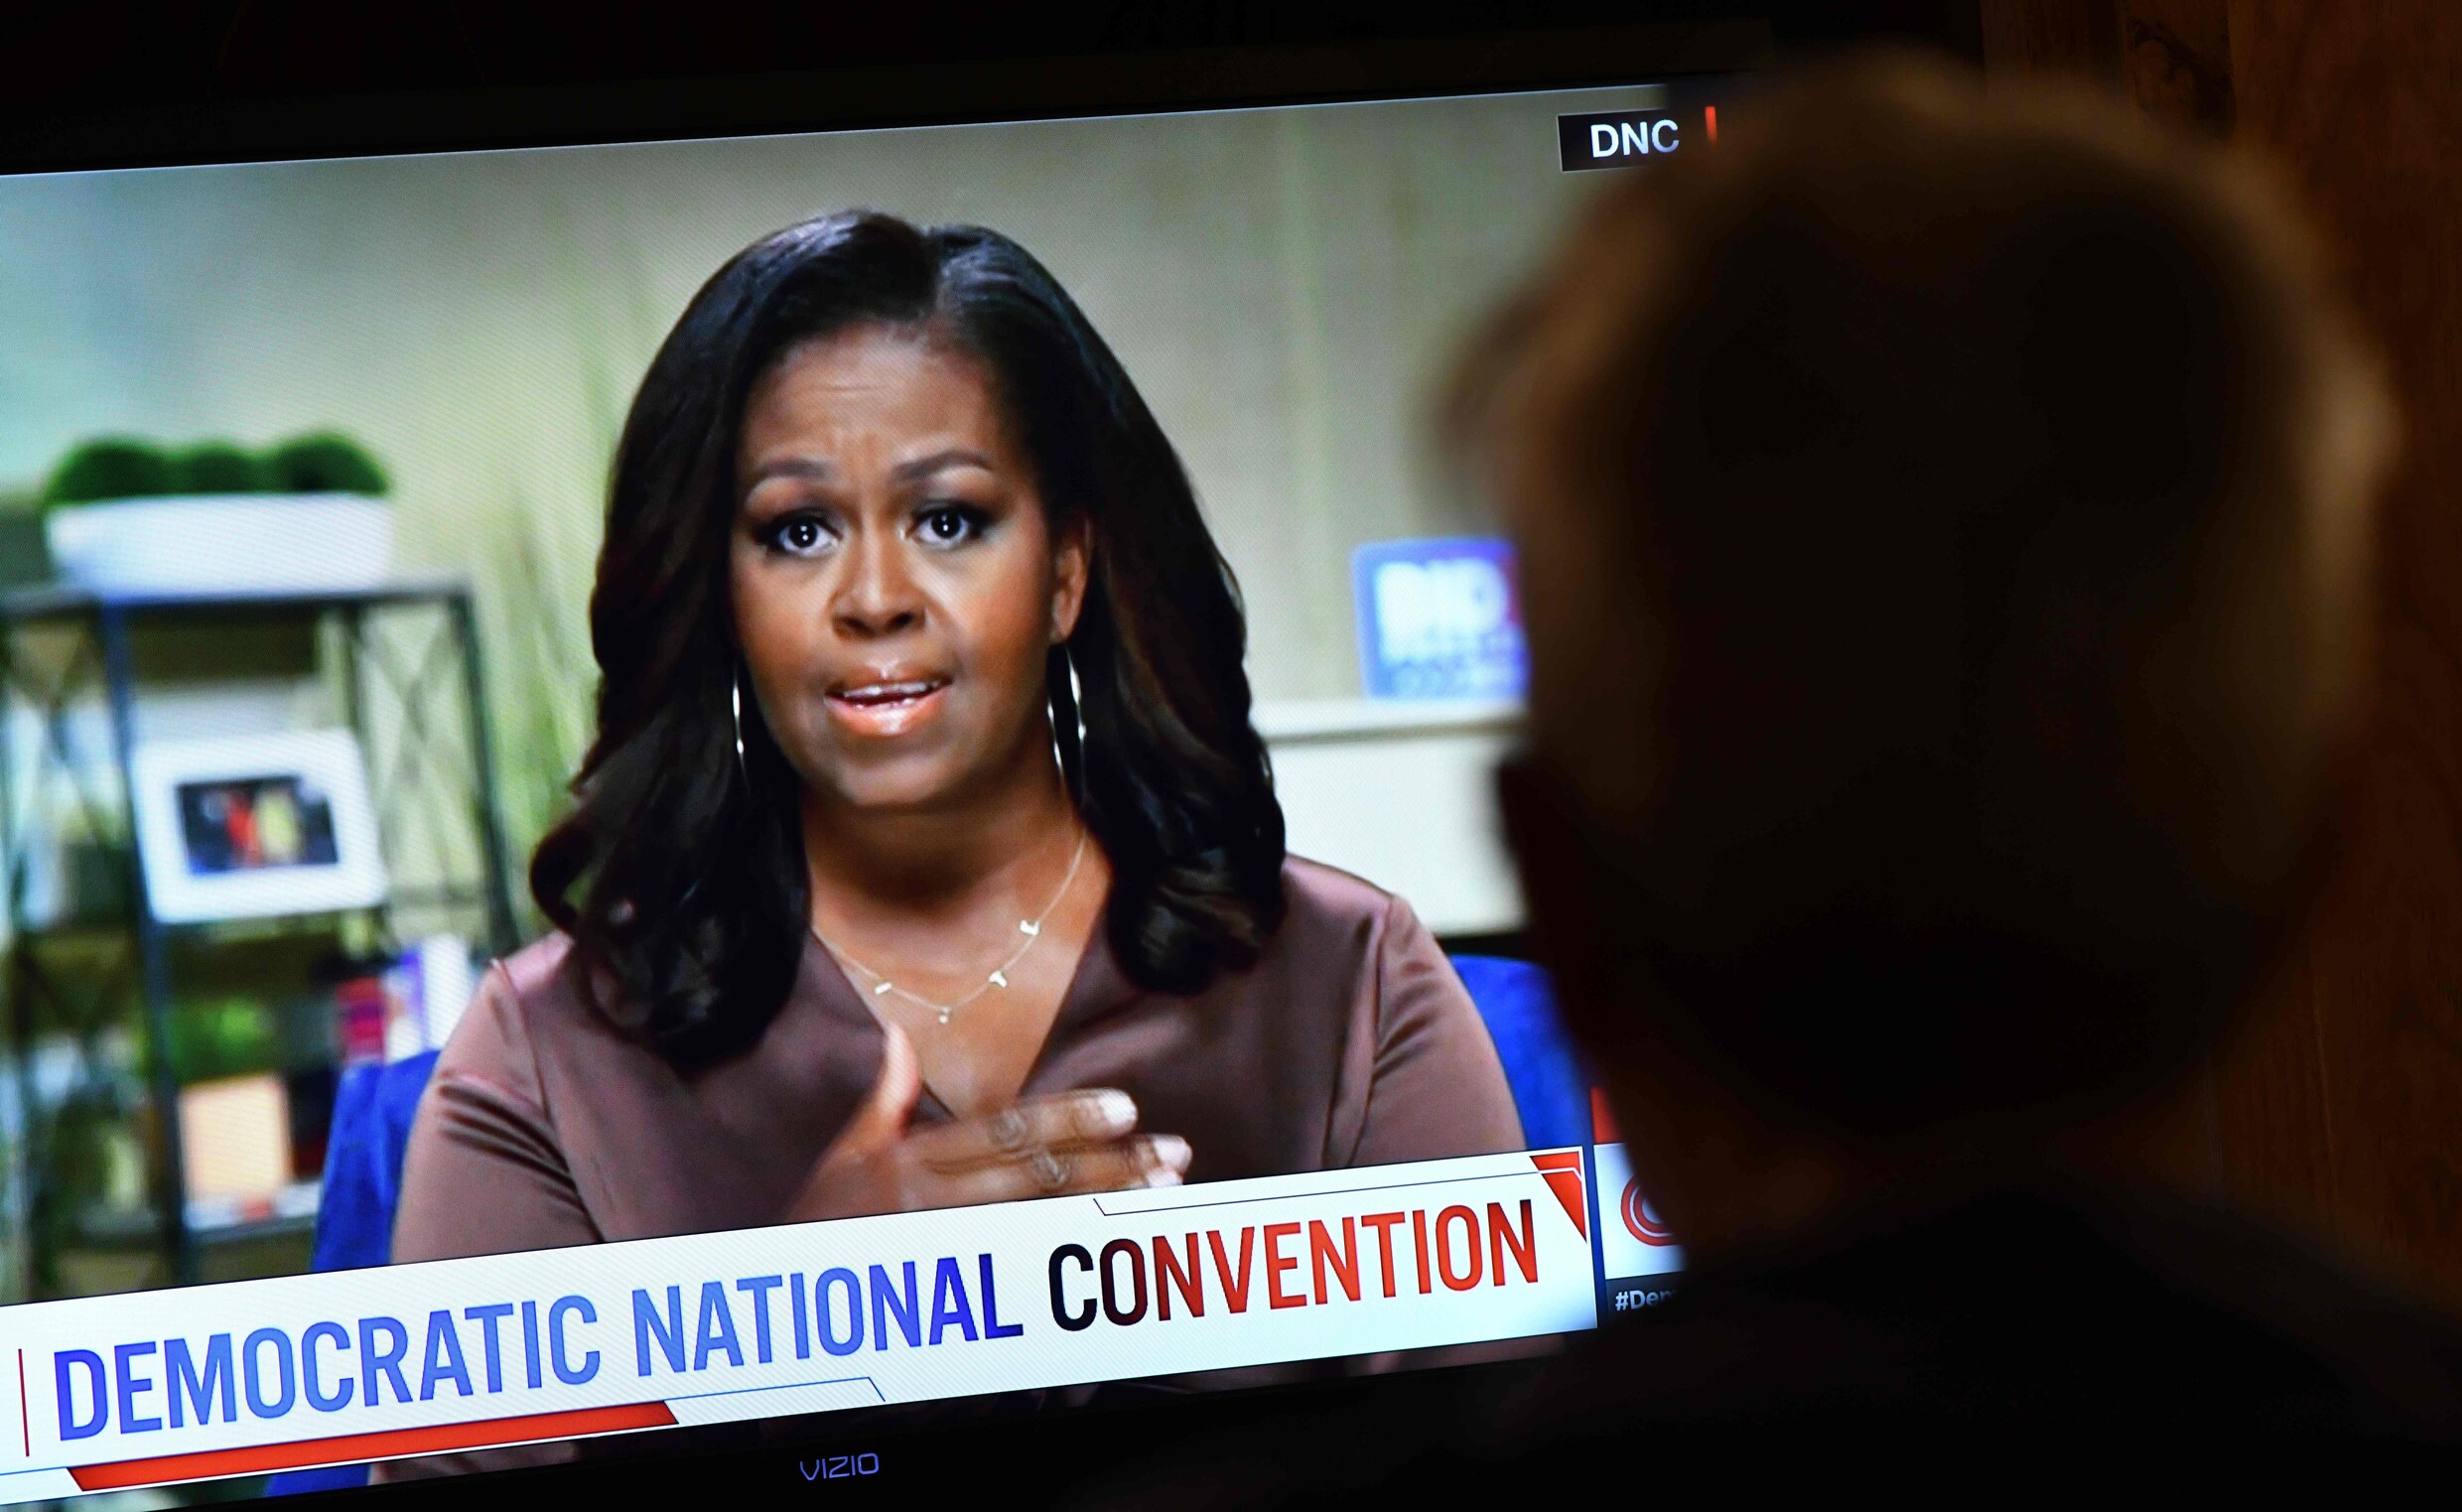 Trump slaat hard terug na speech Michelle Obama: ‘Ze zaait verdeeldheid’